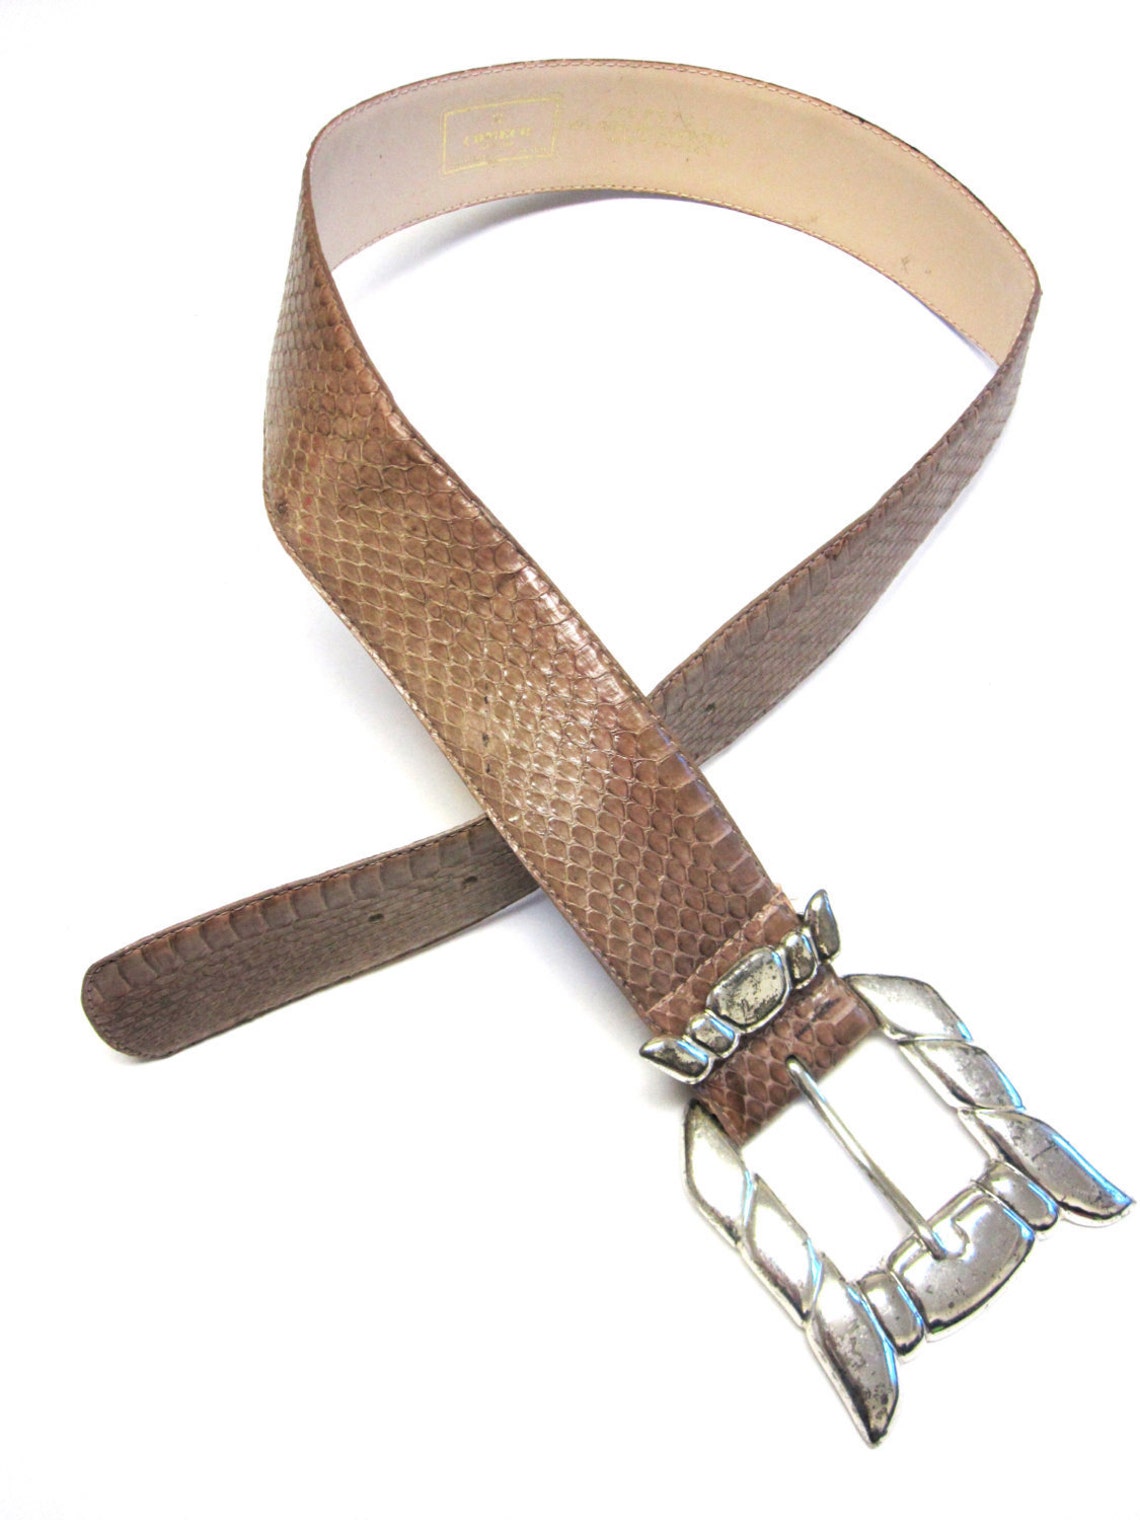 Wide Light Brown Snakeskin Belt Leather Size M/L Tan B3 | Etsy